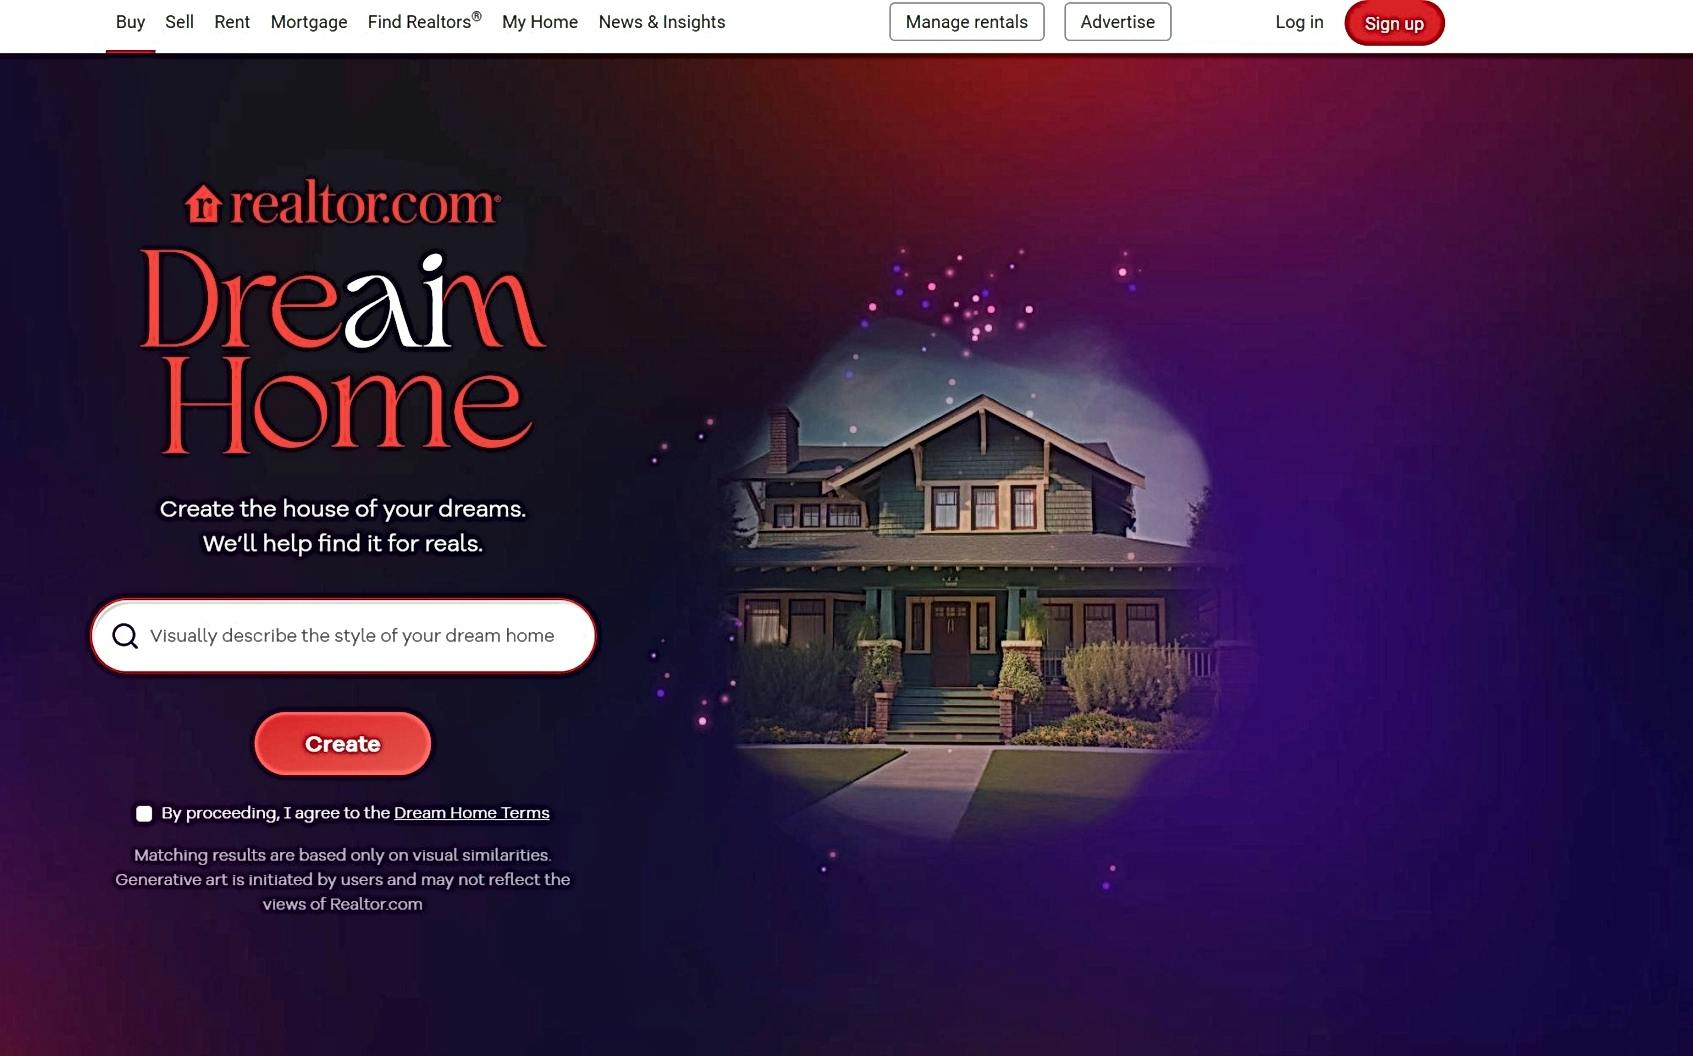 AI Dream Home featured